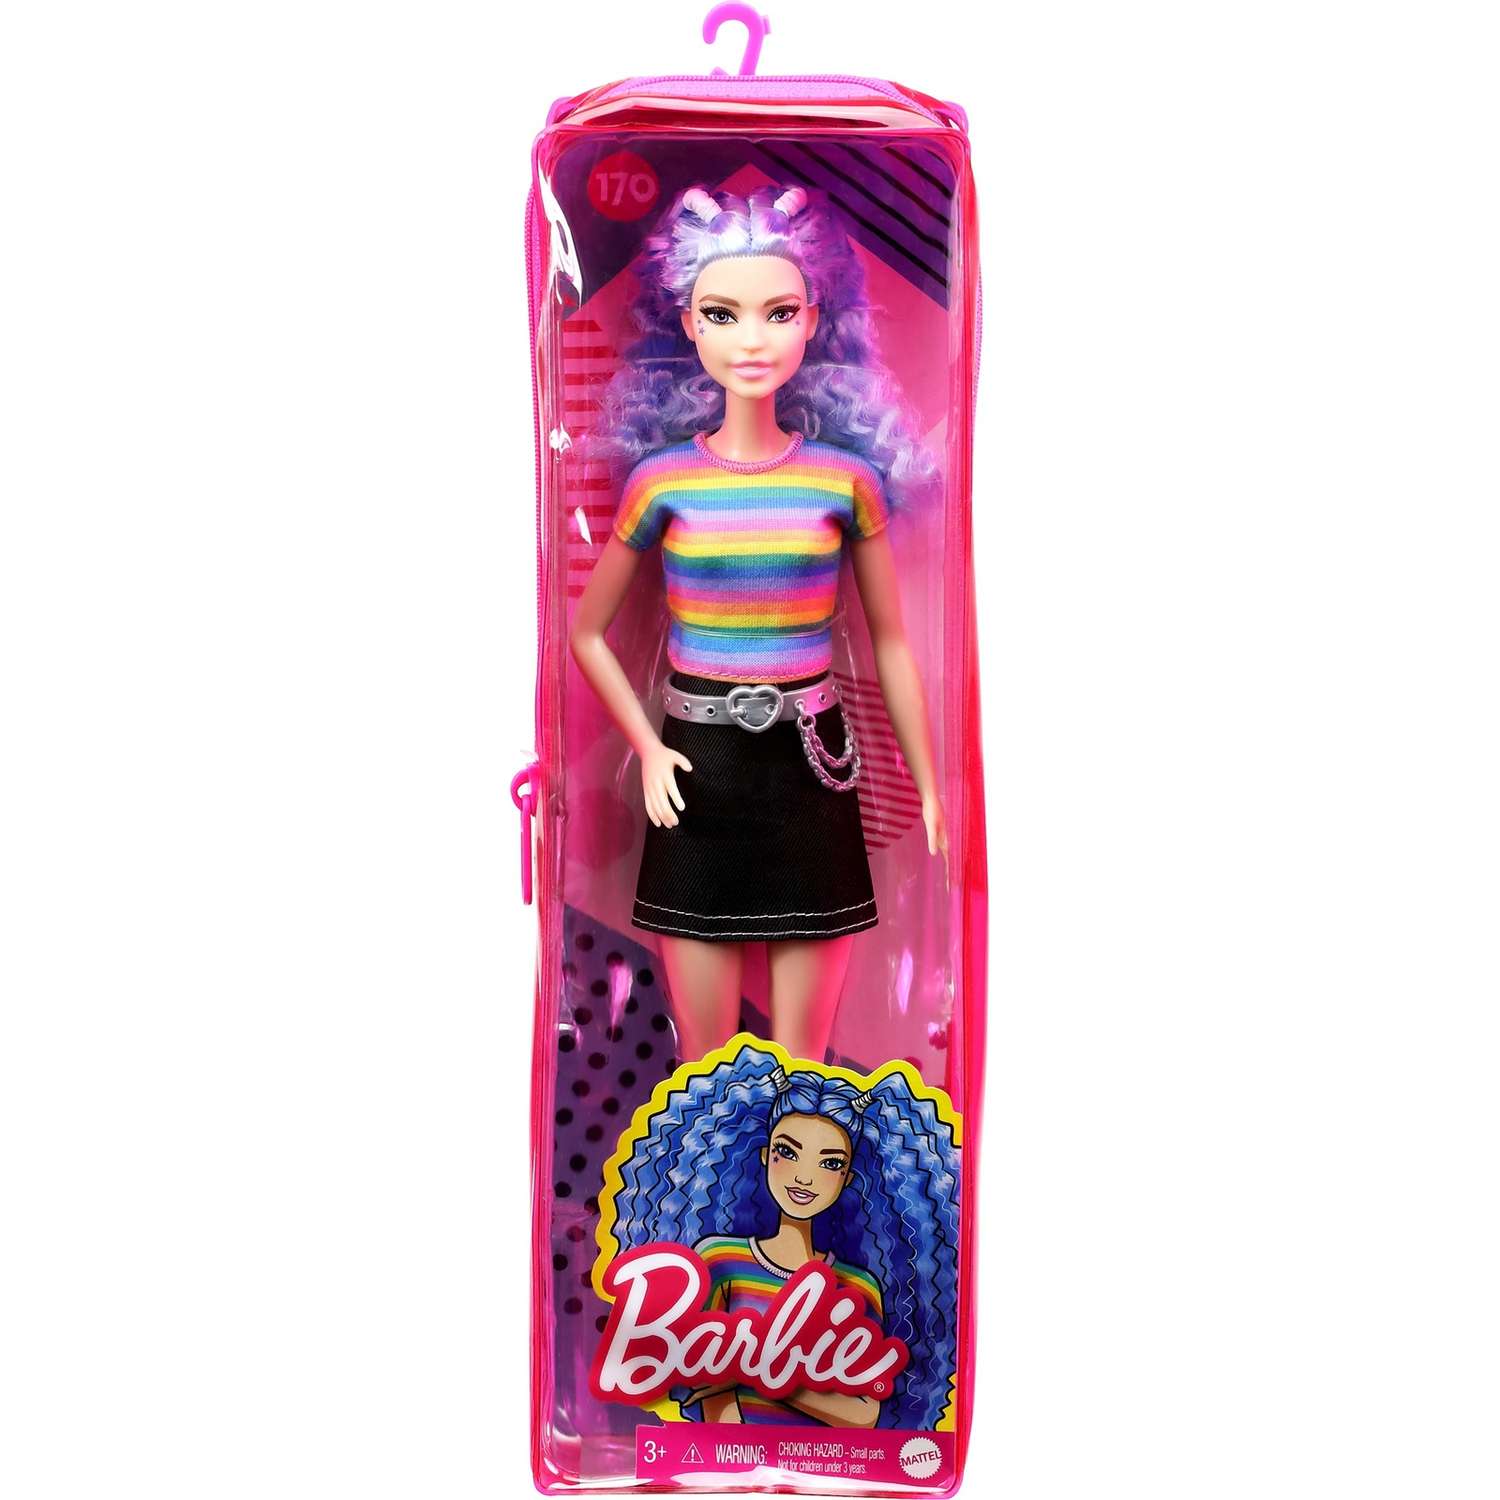 Кукла Barbie Игра с модой 170 GRB61 FBR37 - фото 2